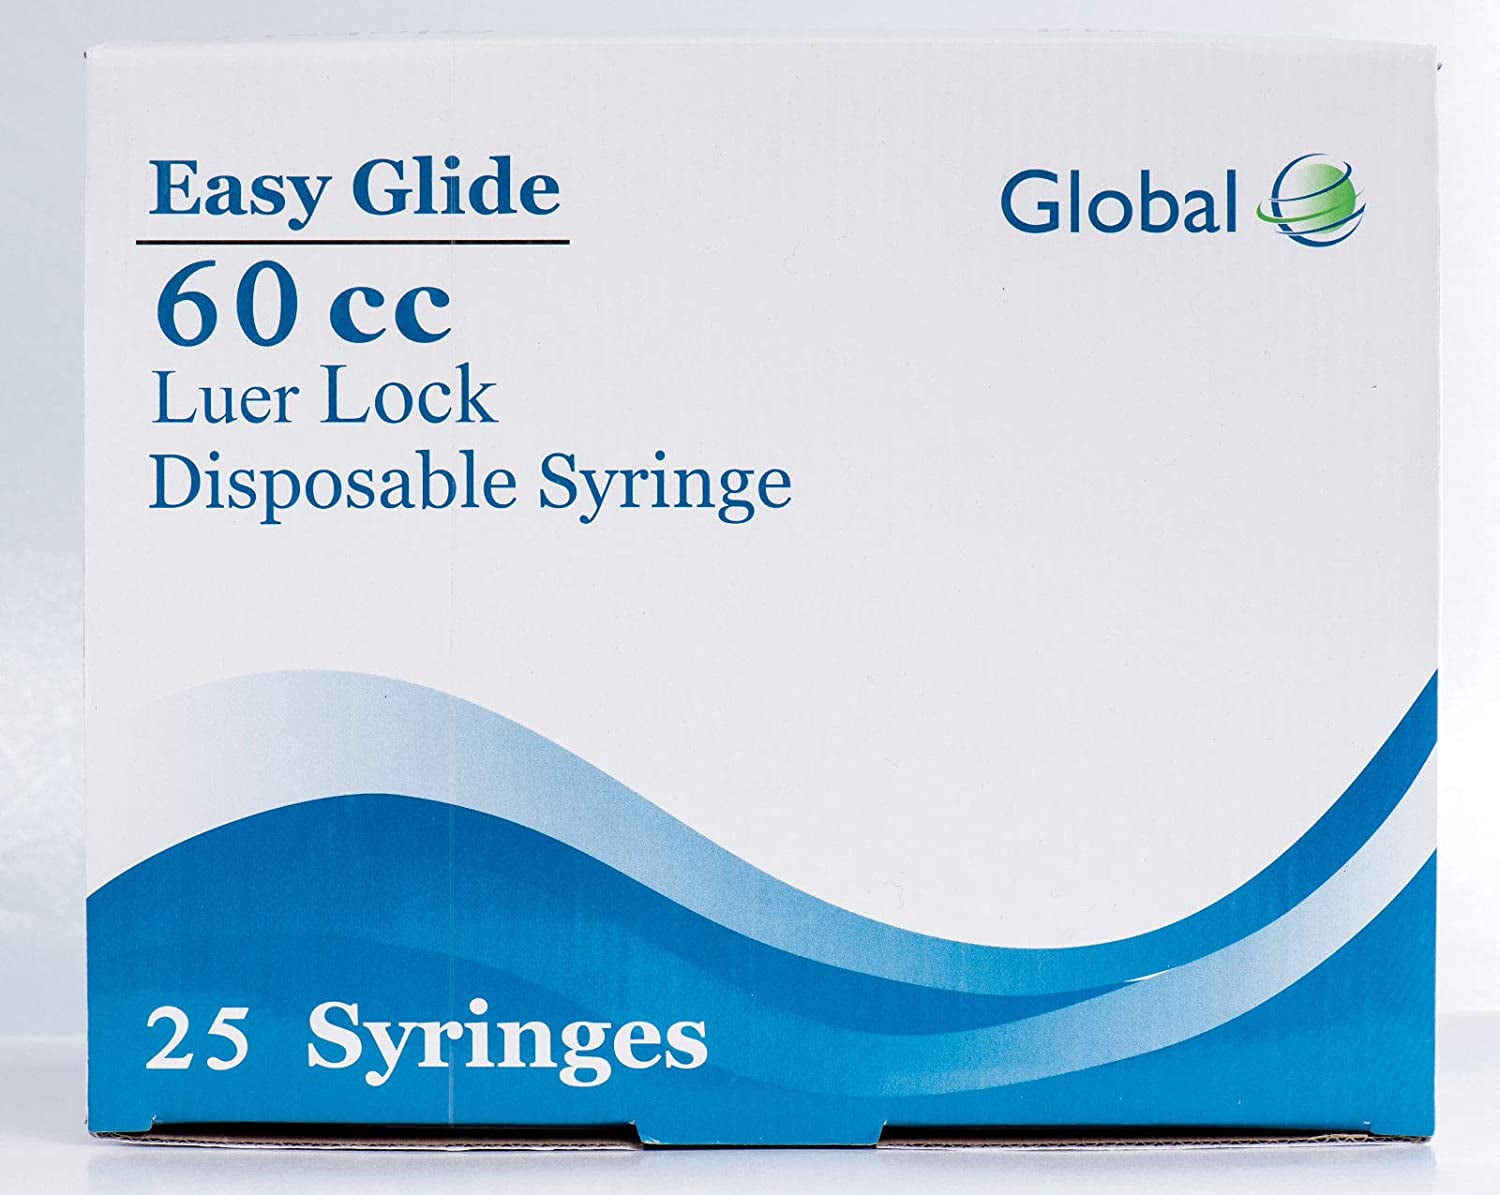 Non Medical Industrial Plastic 2 Part Luer Slip Disposable Glue